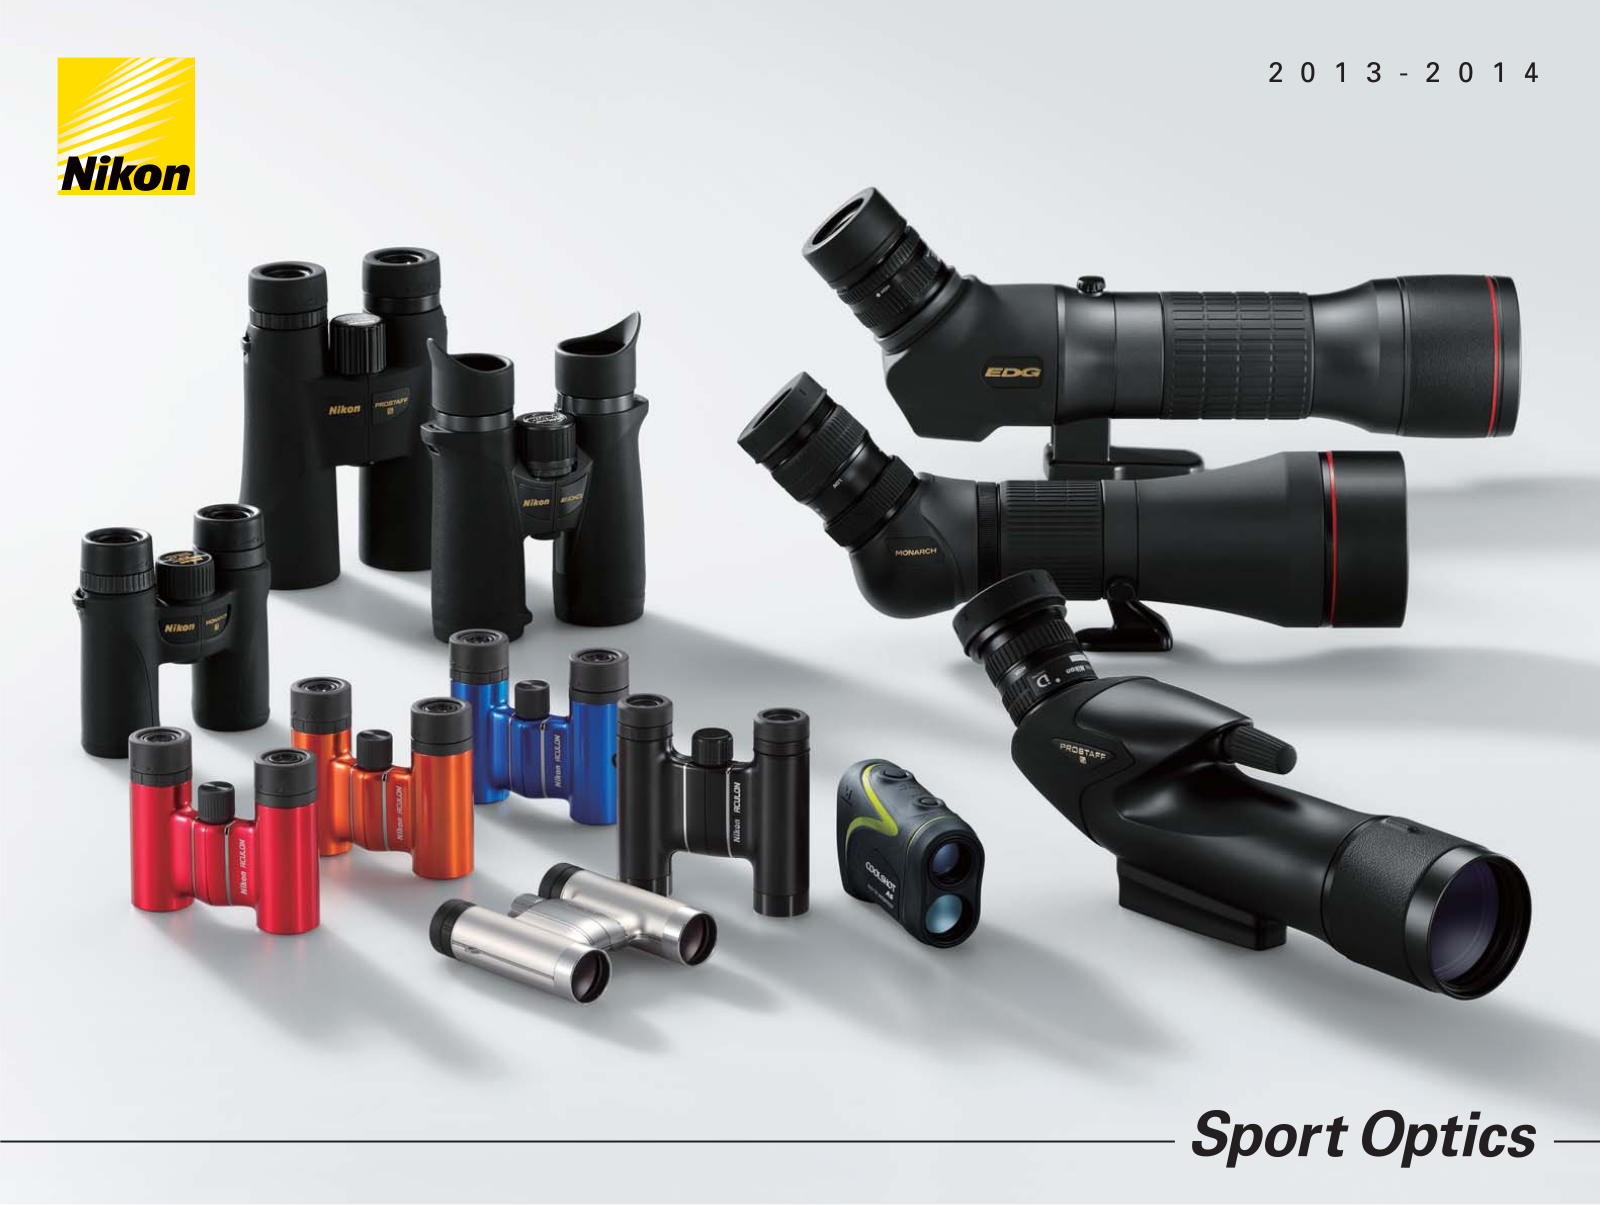 Nikon Sport Optics Brochure